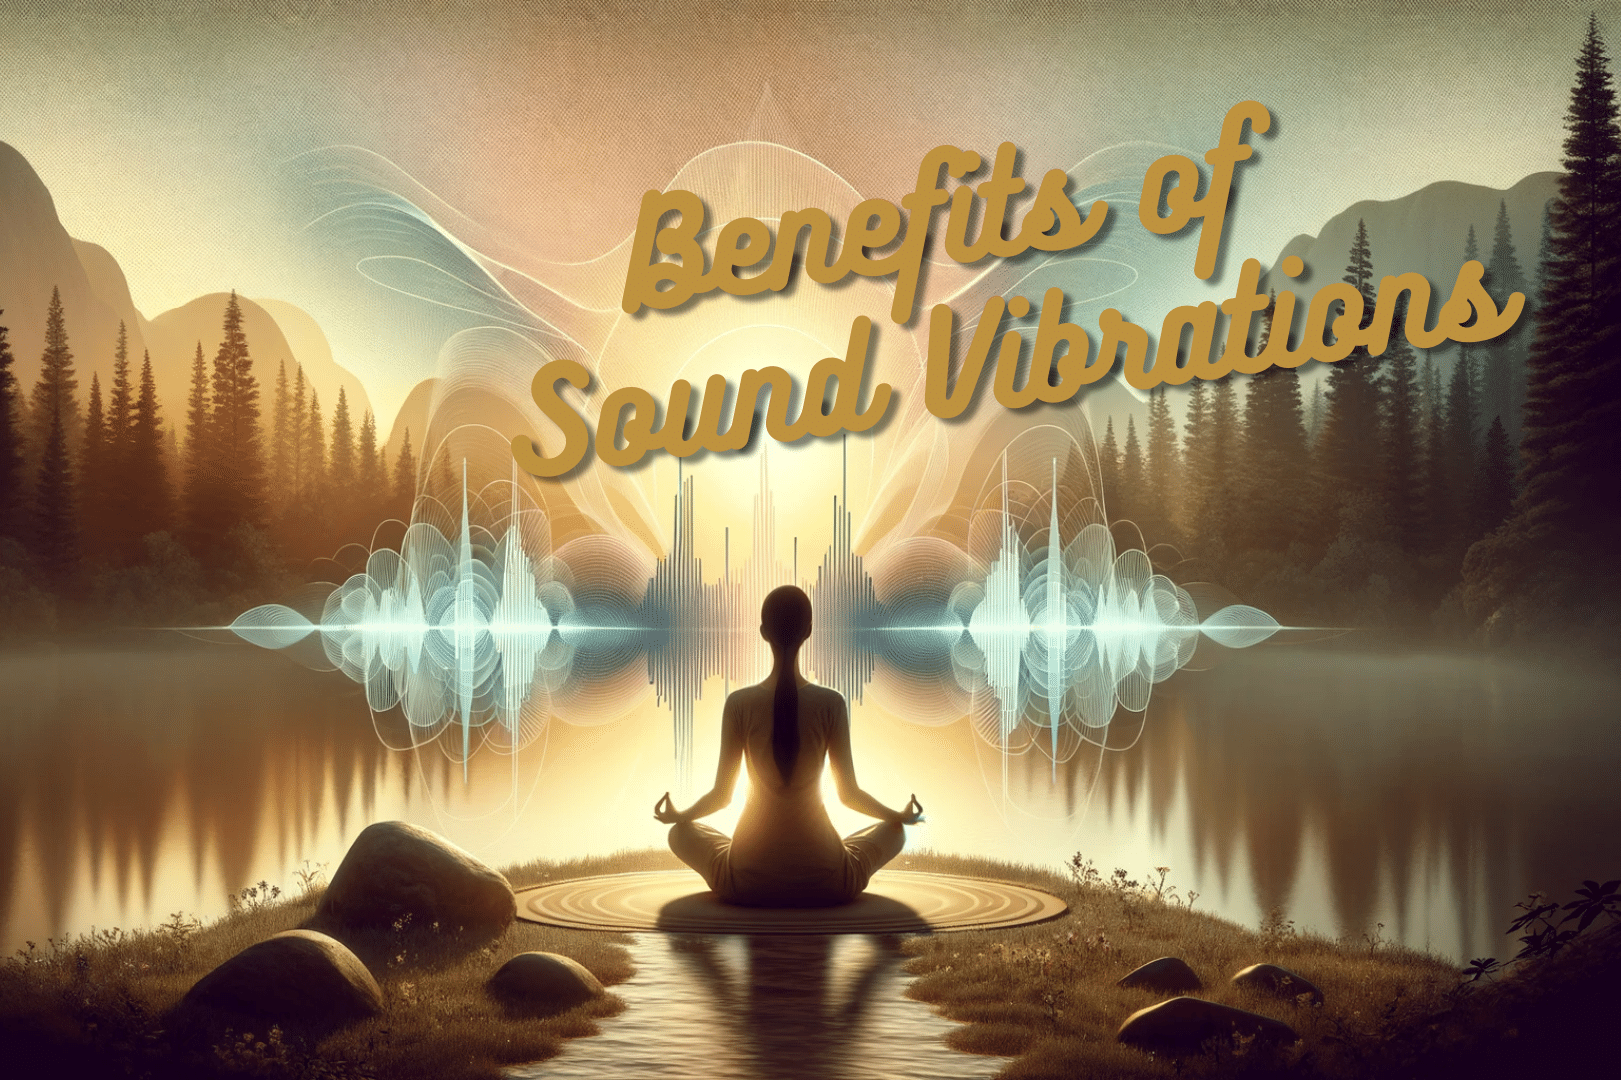 Sound Healing Benefits